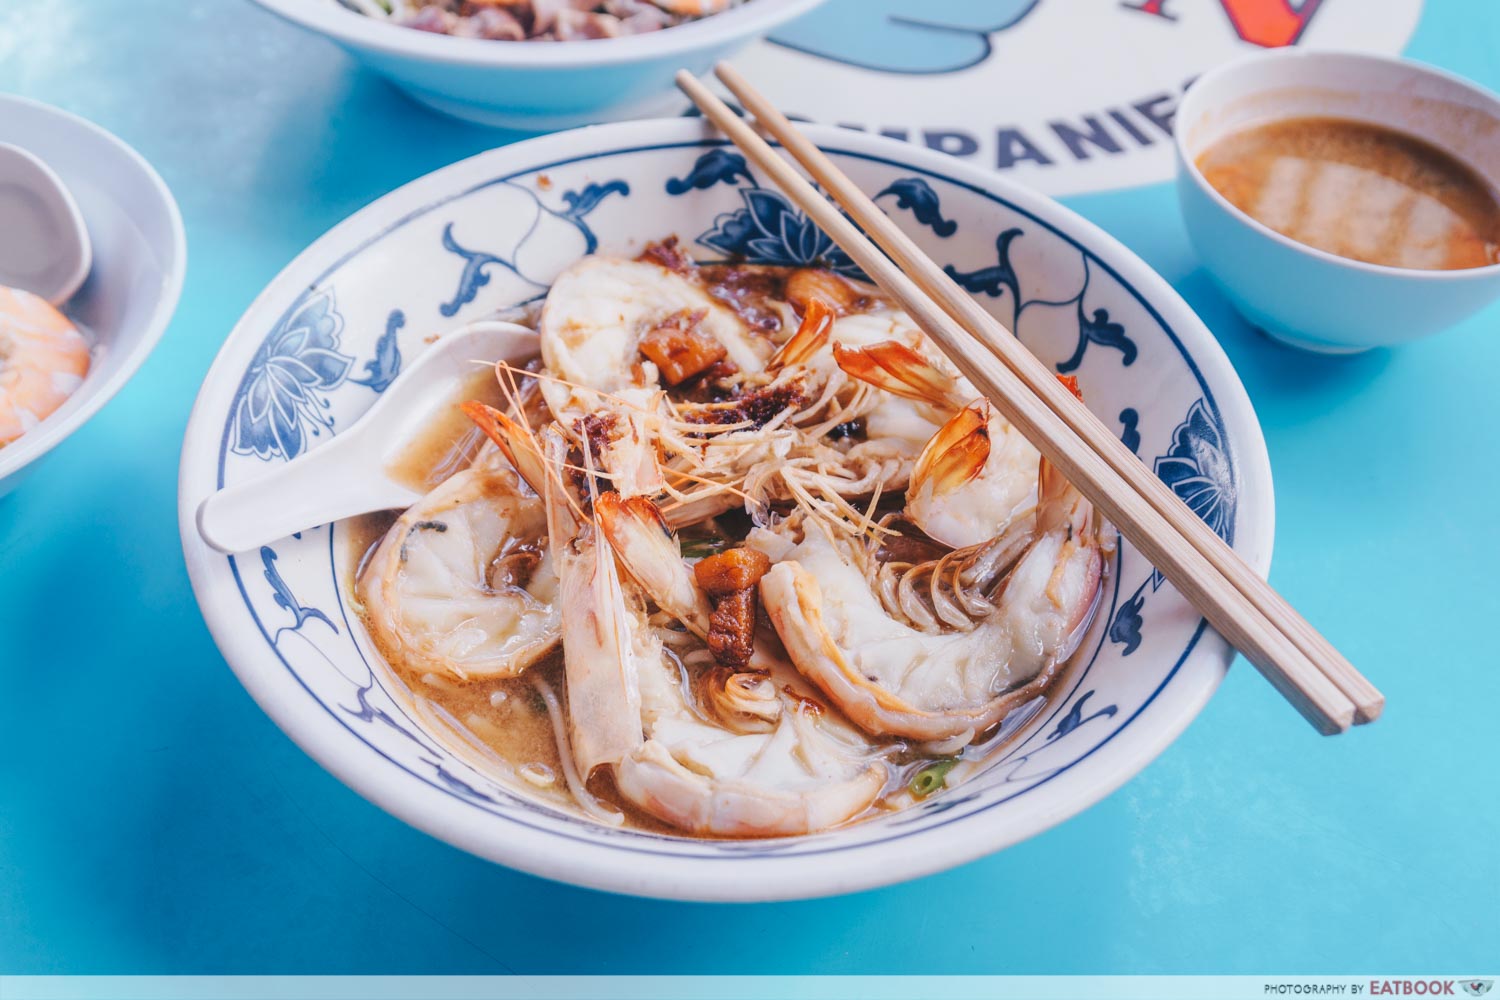 Da Dong Prawn Noodles - Big prawn noodles clsoeup shot